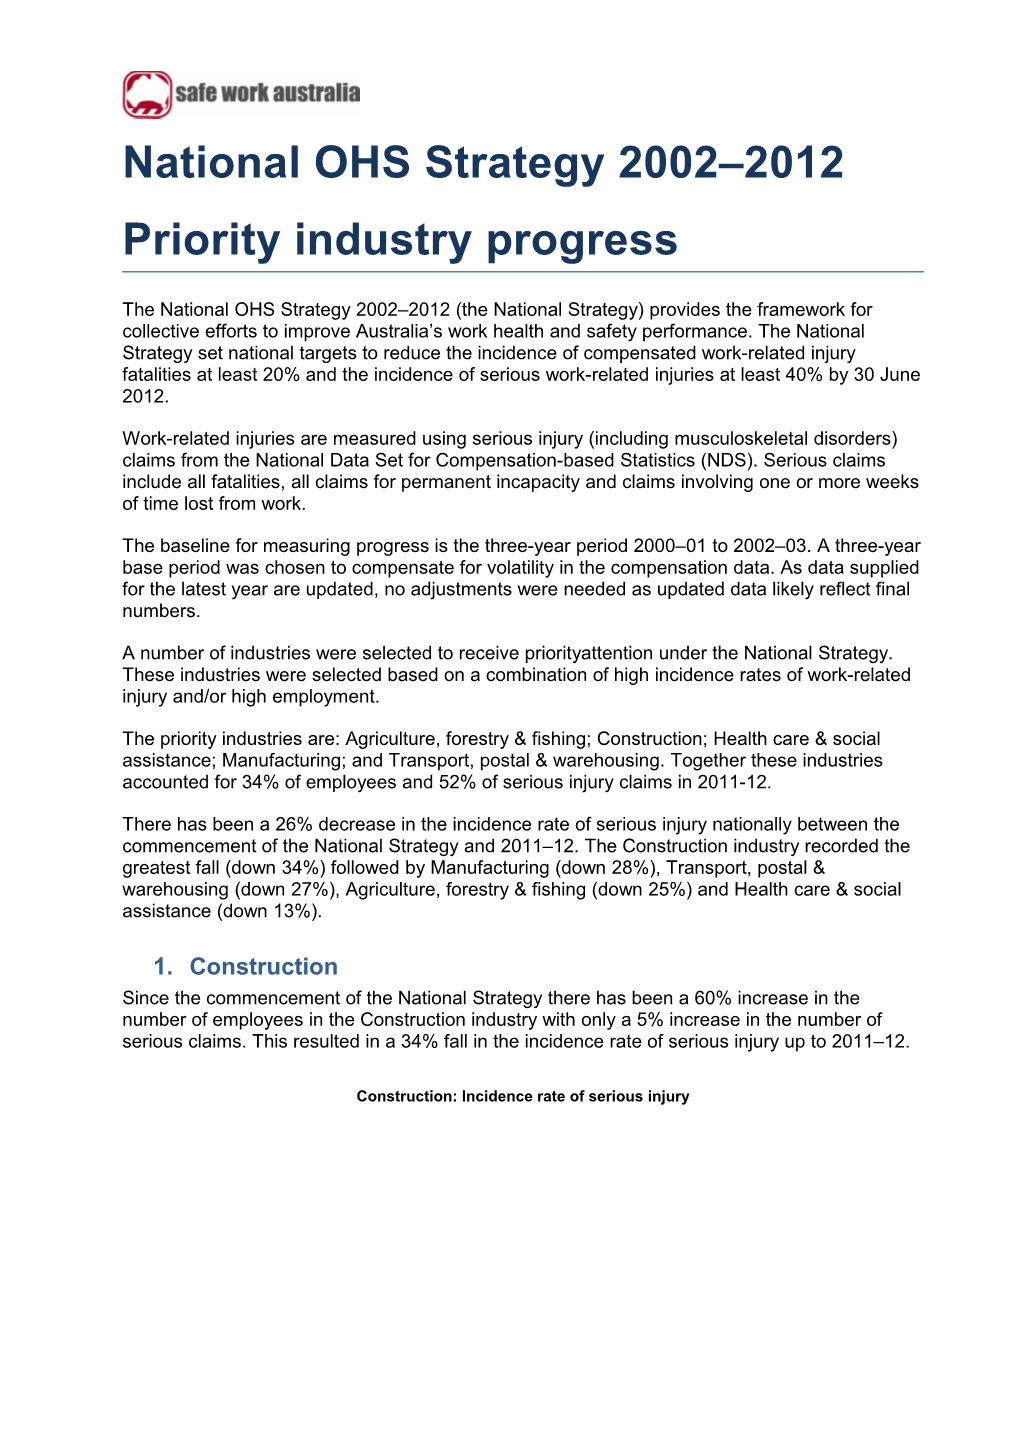 Priority Industries Fact Sheet